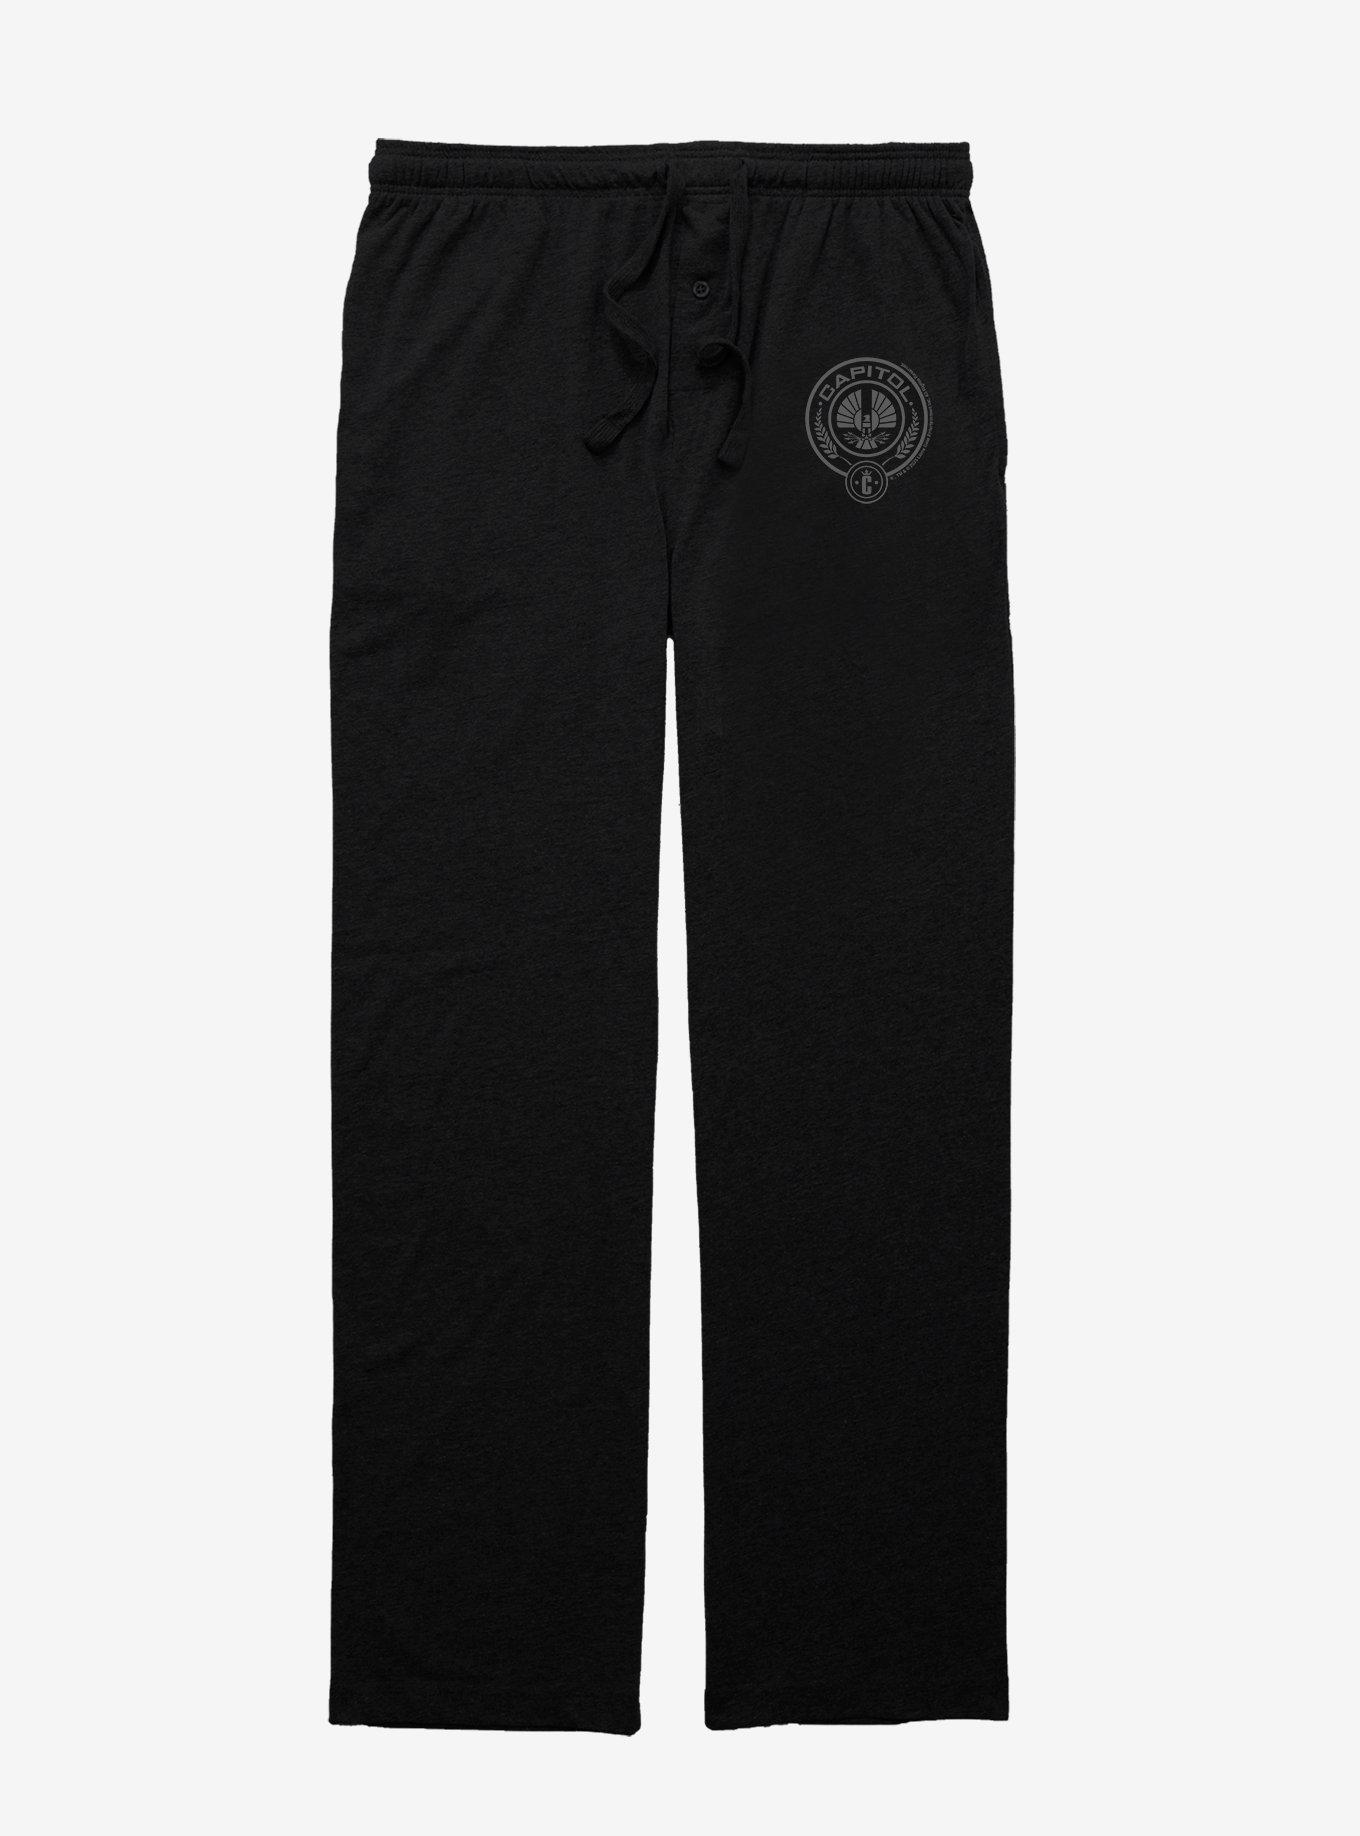 Hunger Games Capitol Emblem Pajama Pants